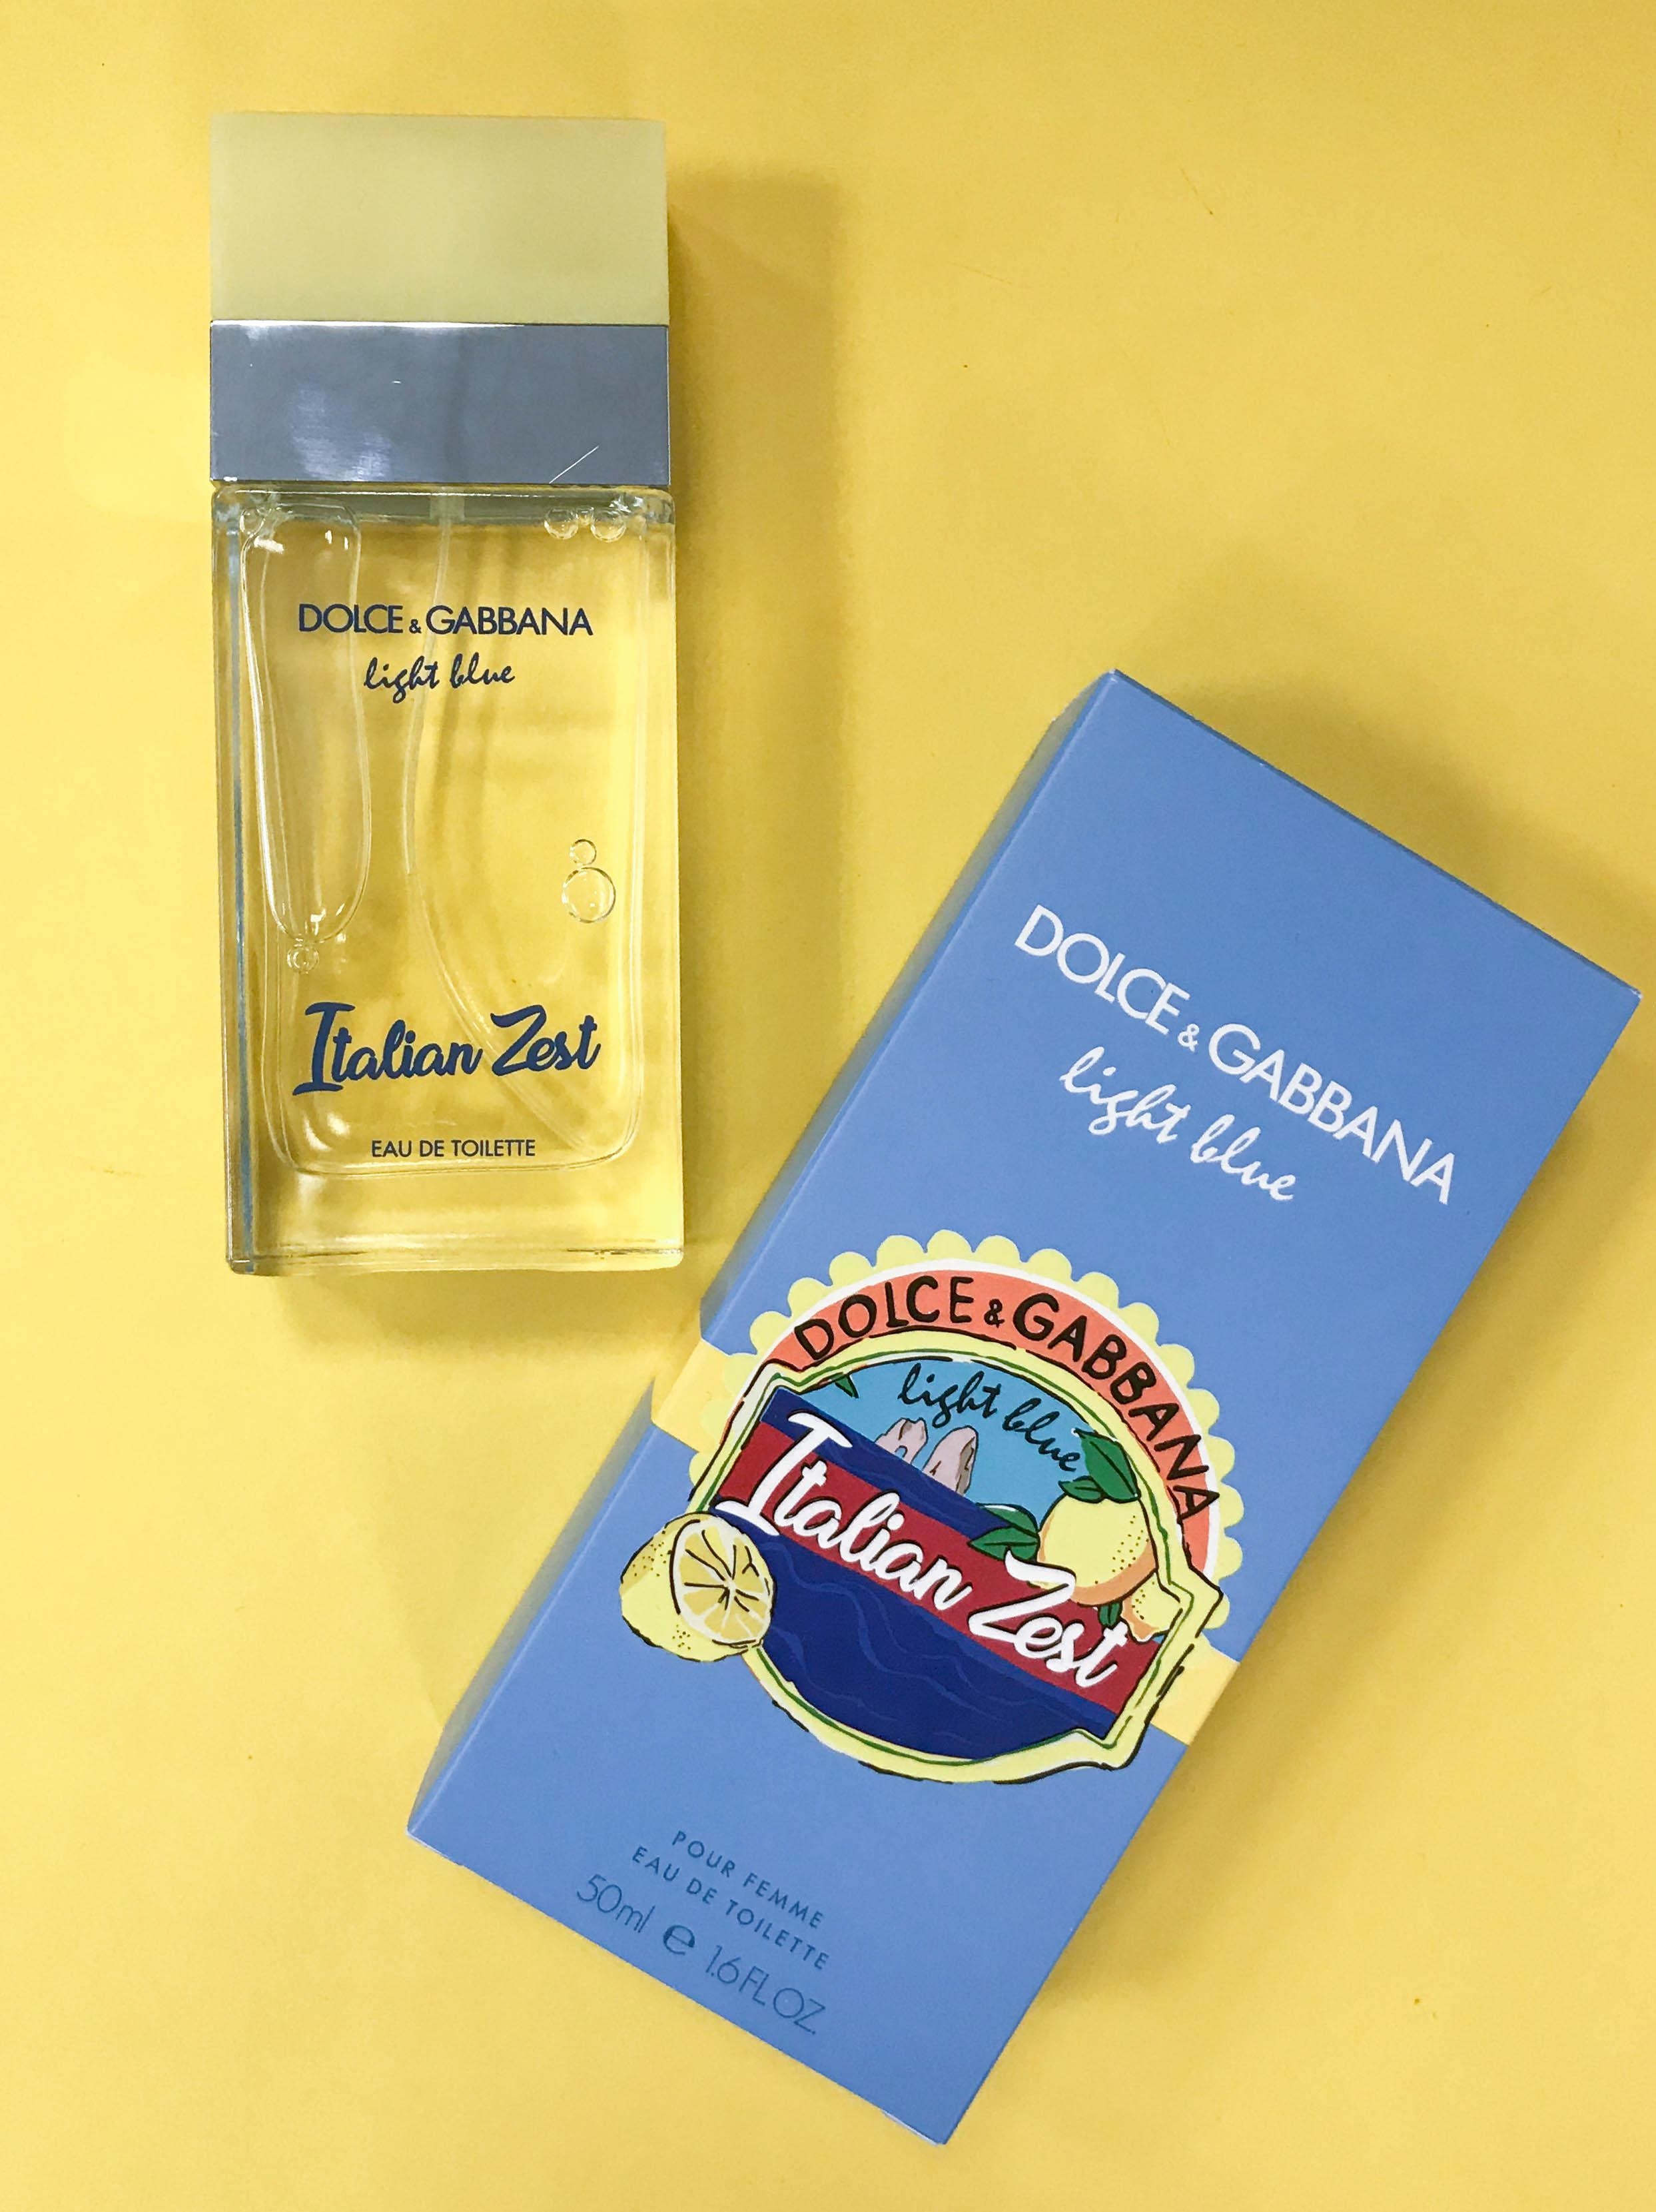 Zitroniger Kultduft  für den Sommer: Das Dolce & Gabbana Light Blue Italian Zest! #beautylieblinge #dolcegabbana #parfum